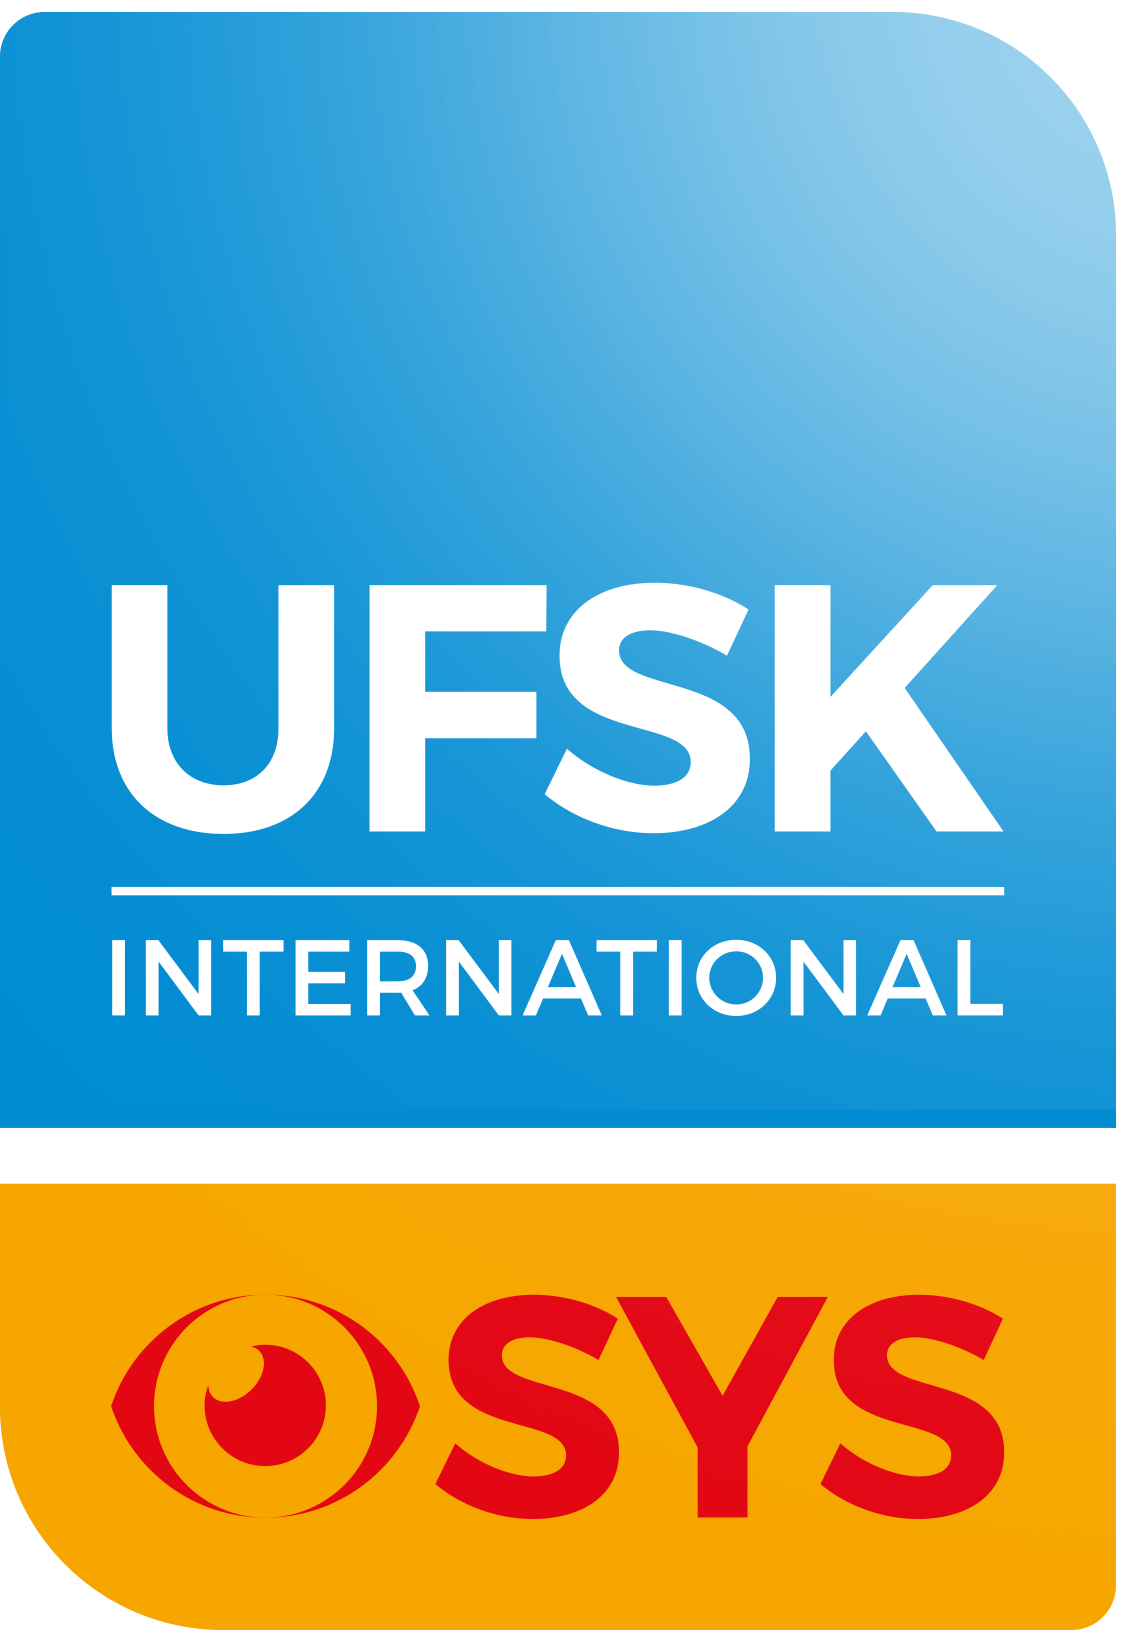 UFSK - International OSYS GmbH